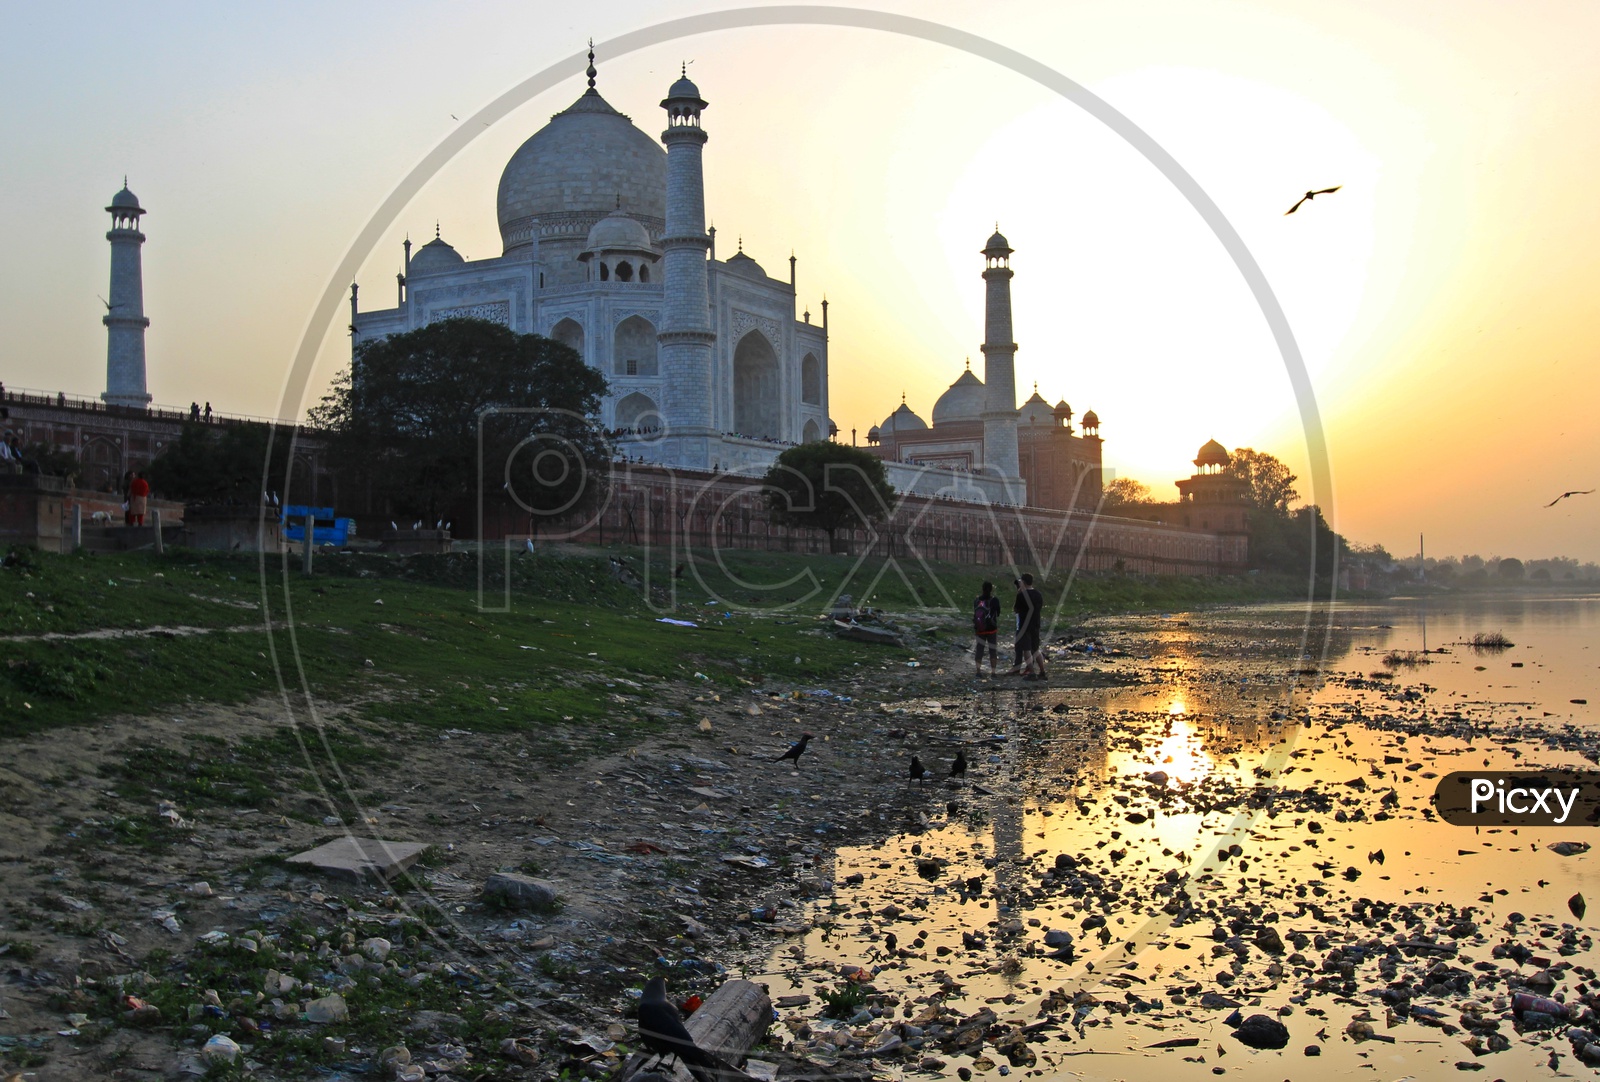 Beauty and the Beast - Taj Mahal/7 Wonders